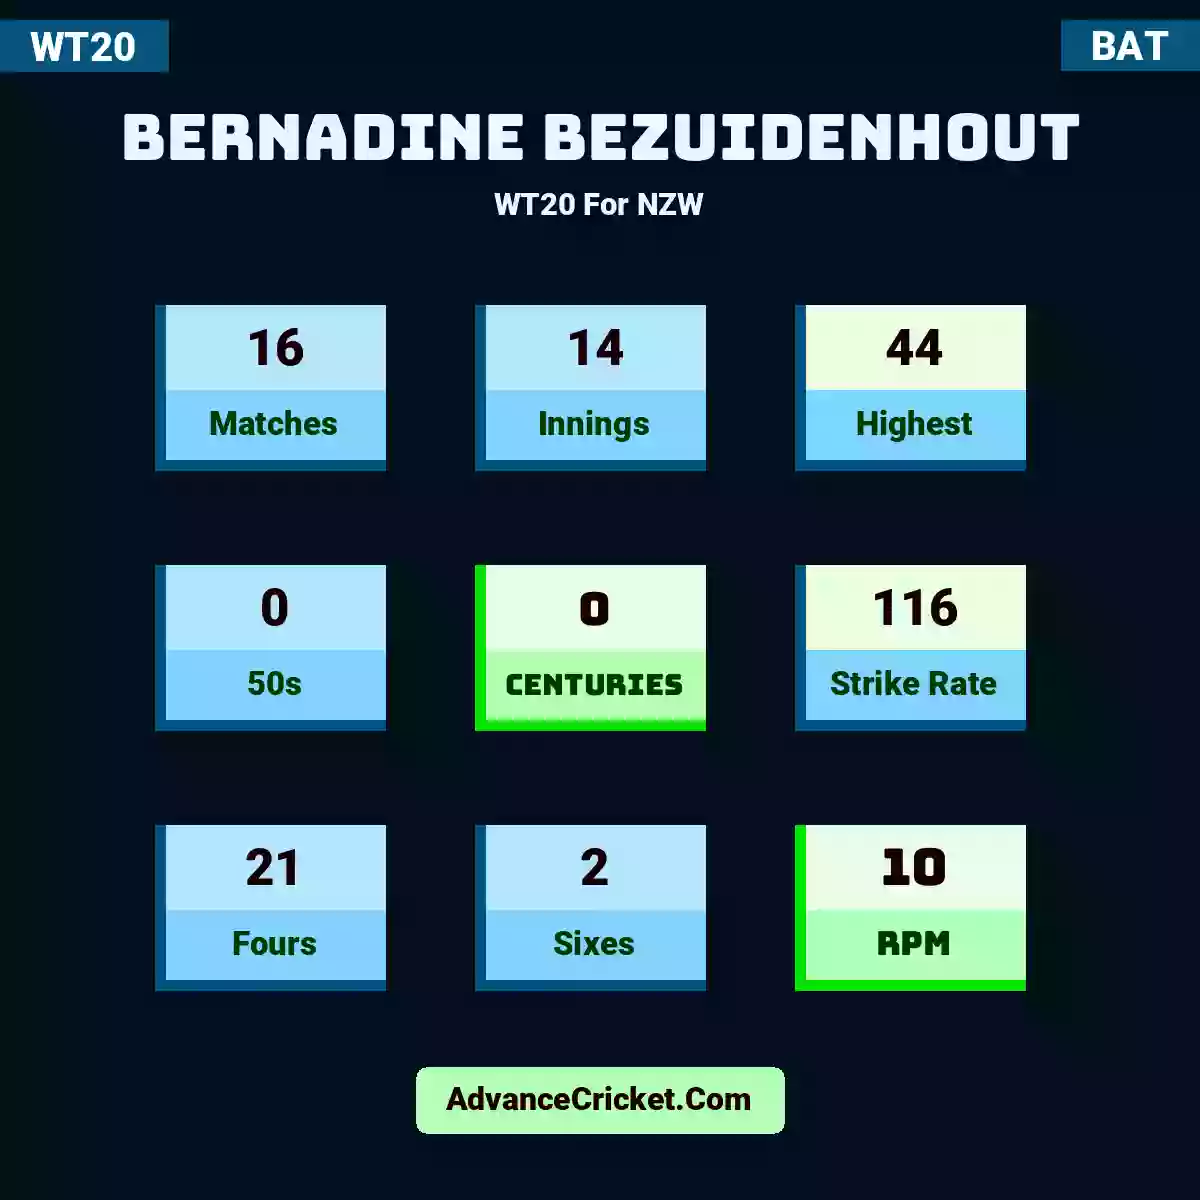 Bernadine Bezuidenhout WT20  For NZW, Bernadine Bezuidenhout played 16 matches, scored 44 runs as highest, 0 half-centuries, and 0 centuries, with a strike rate of 116. B.Bezuidenhout hit 21 fours and 2 sixes, with an RPM of 10.